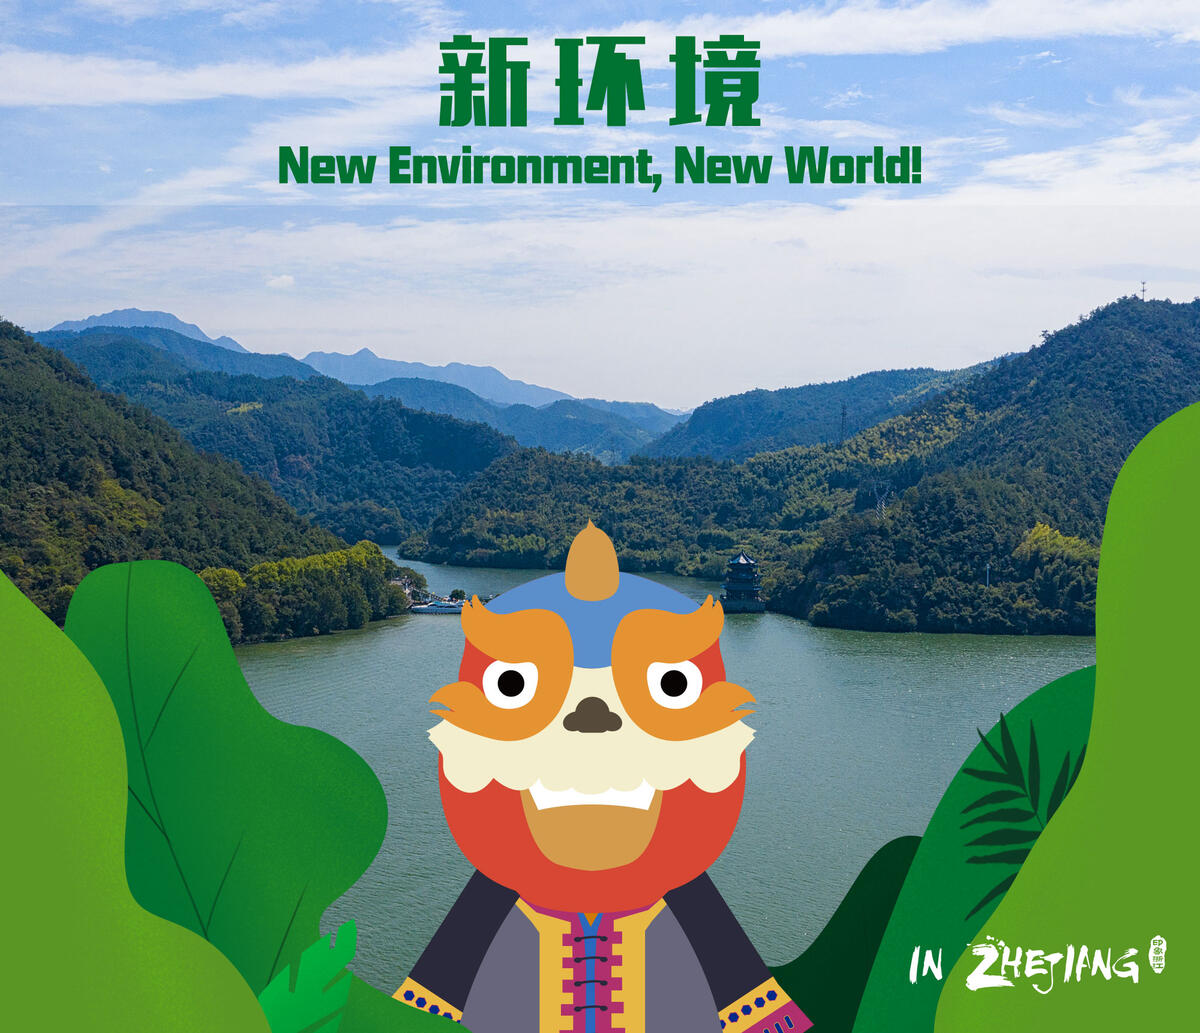 New Environment, New World!